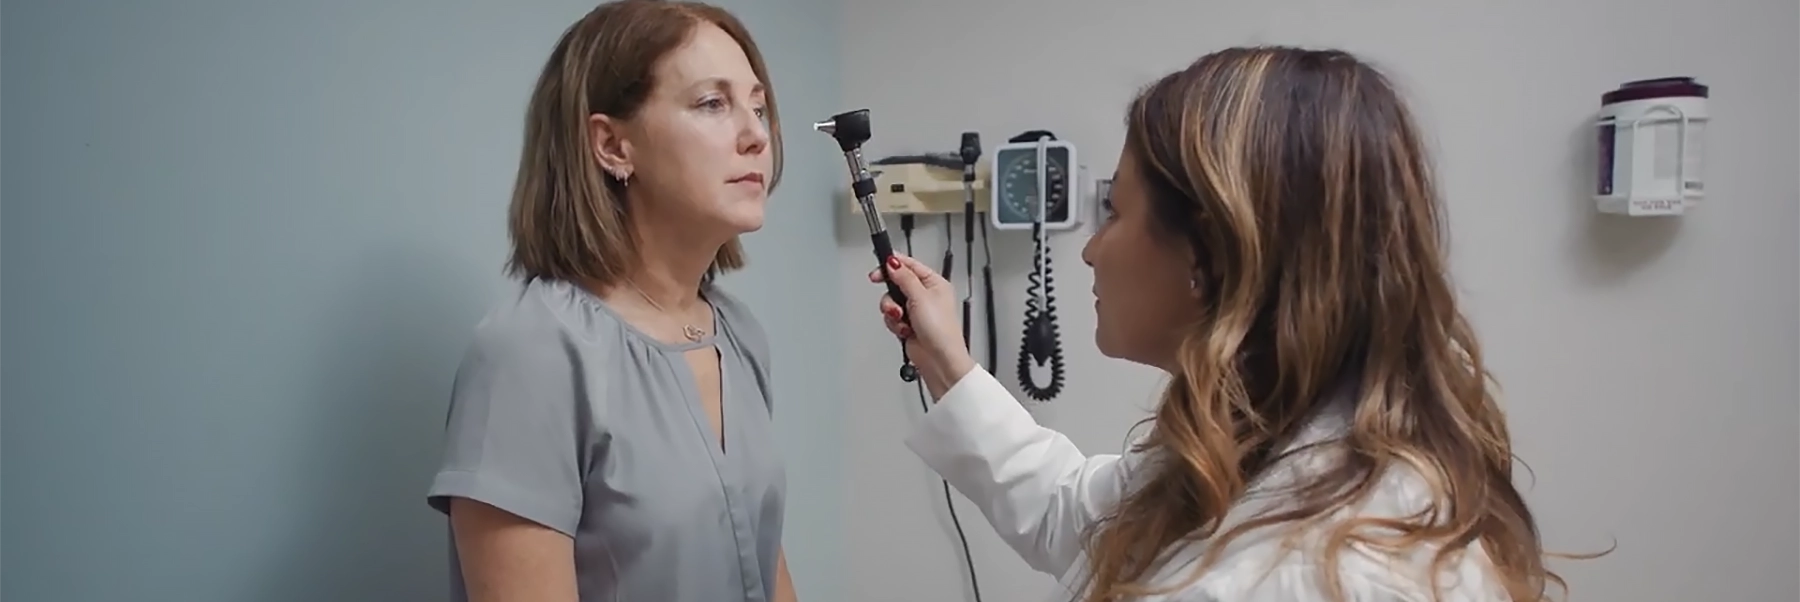 doctor examines woman who has had a stroke